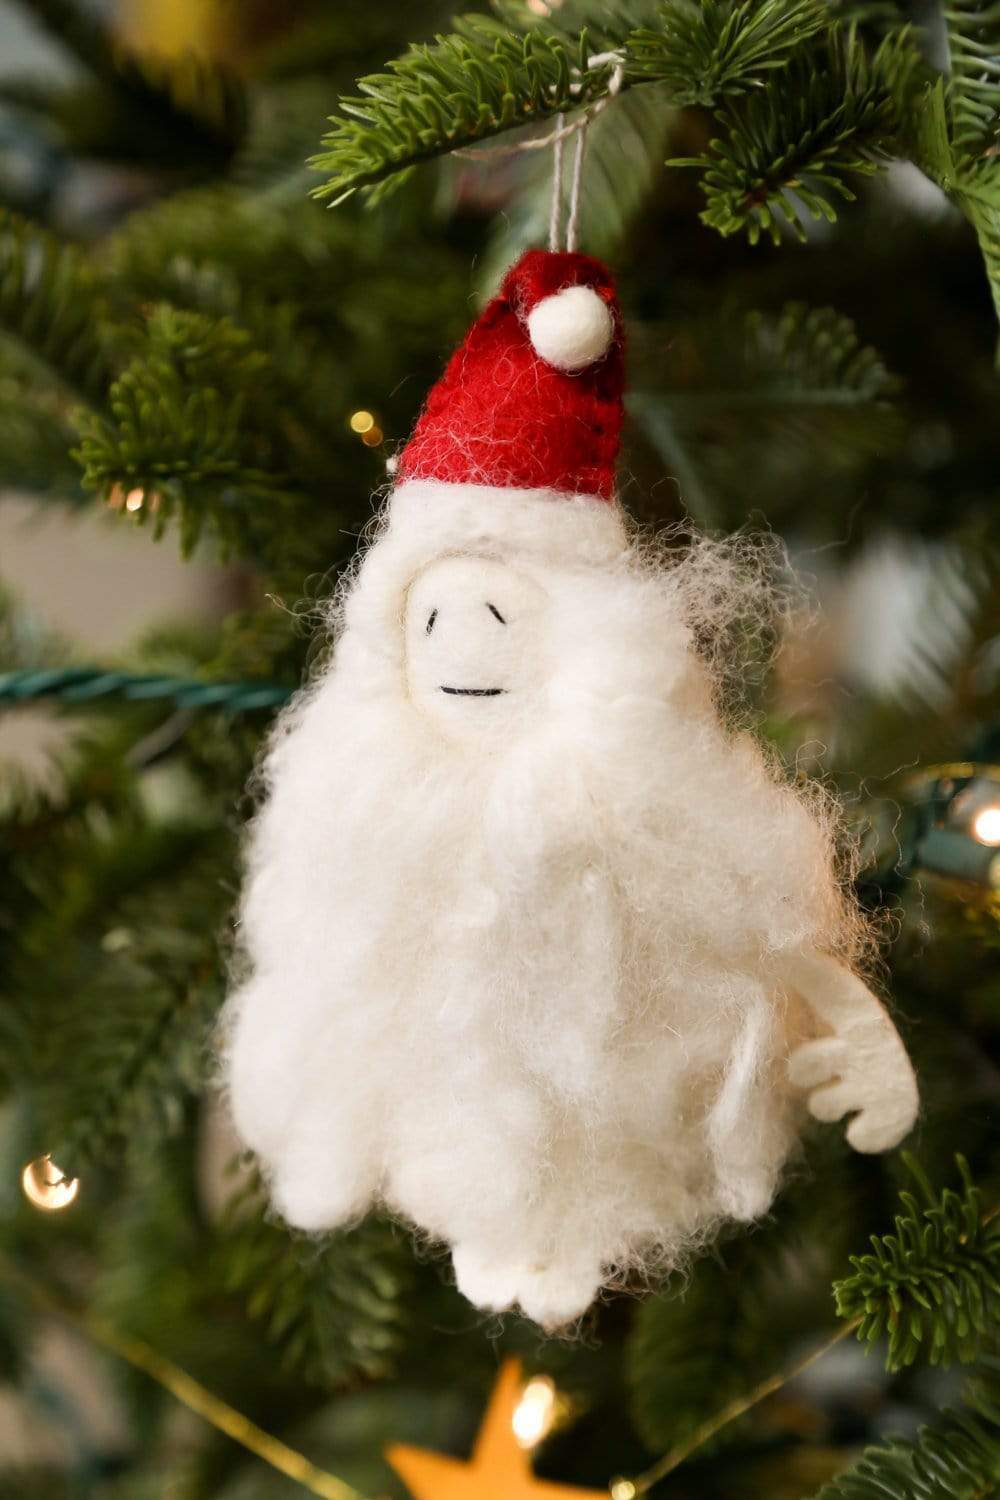 Yeti Felt Christmas Tree Ornament